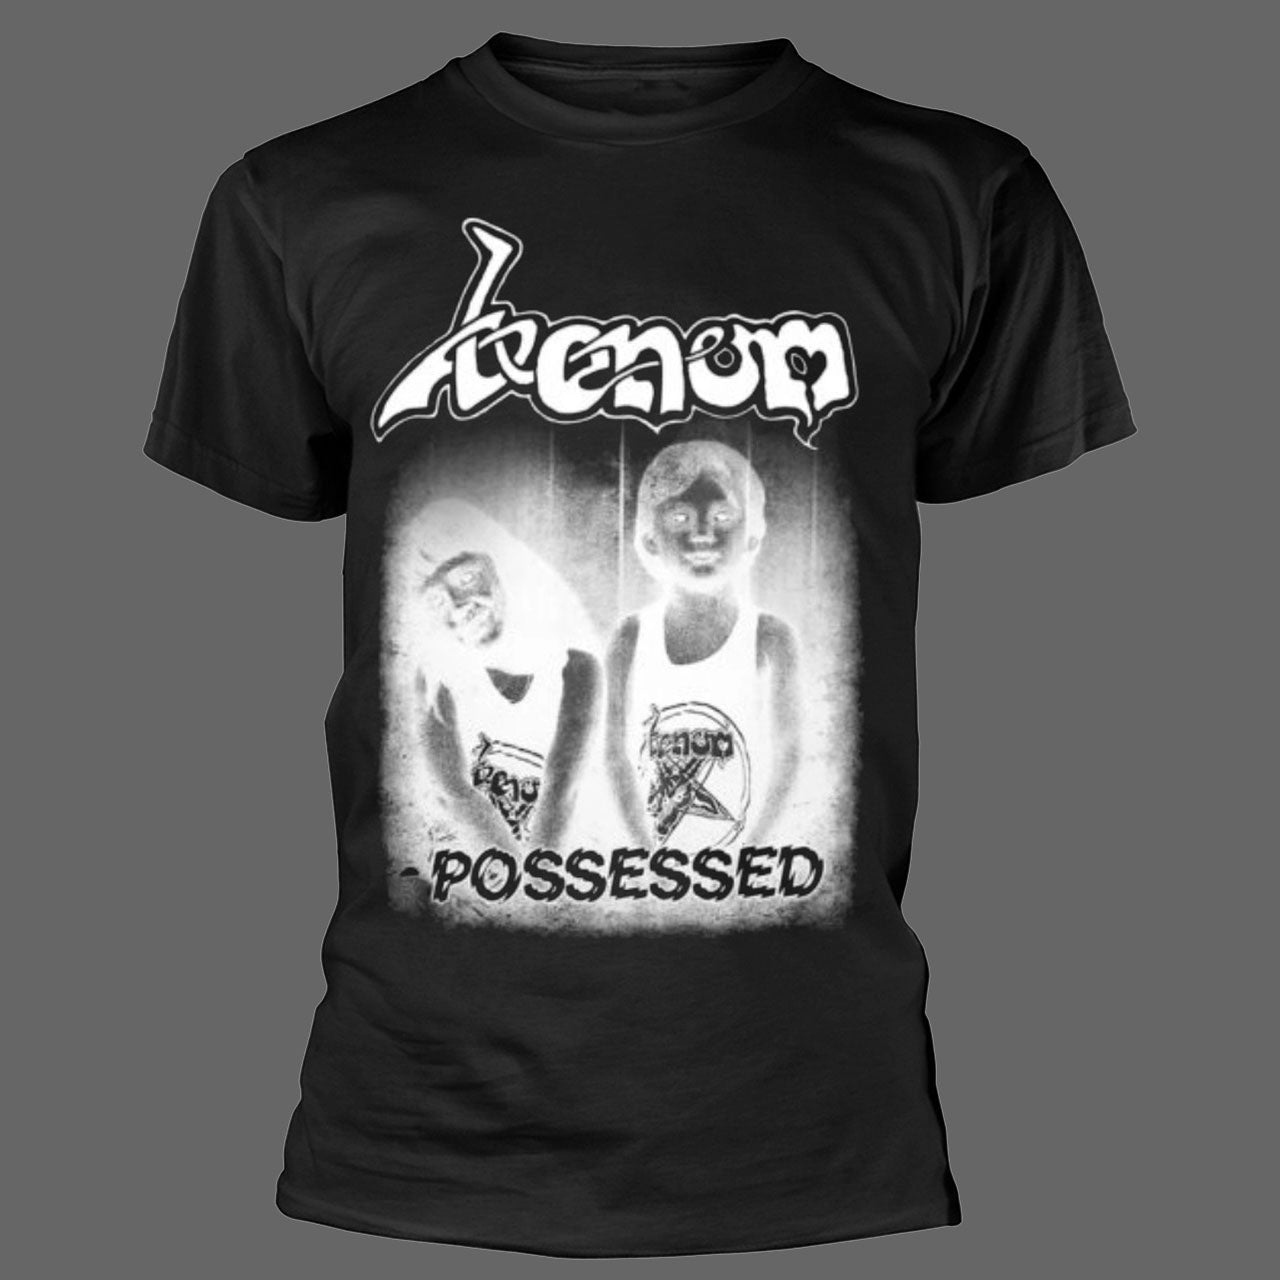 Venom - Possessed (T-Shirt)